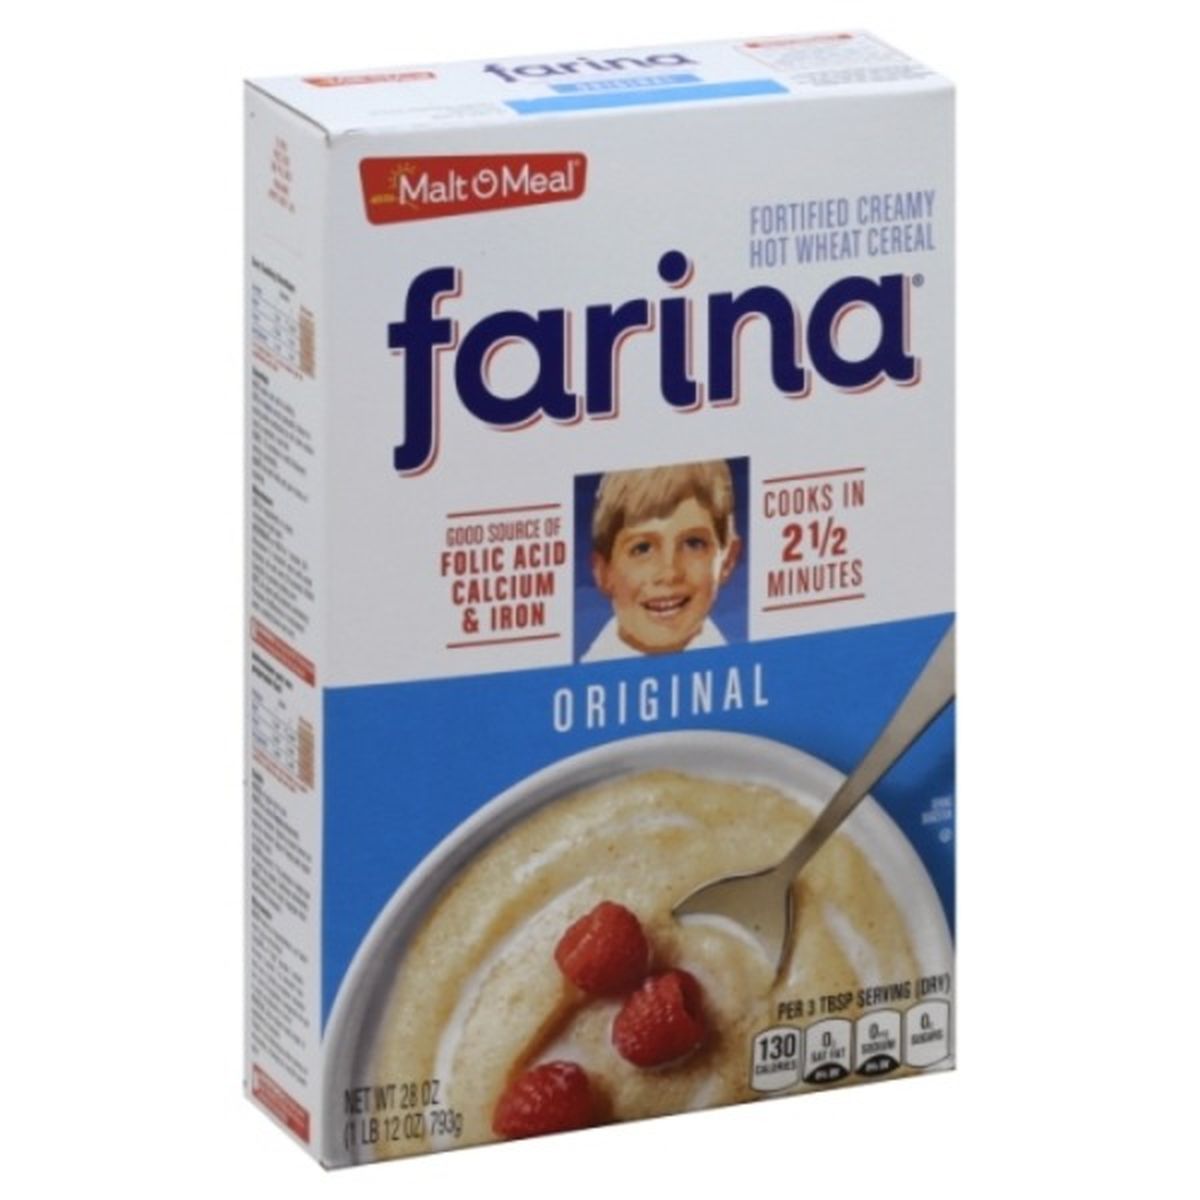 Calories in Malt-O-Meal Farina Cereal, Hot Wheat, Original